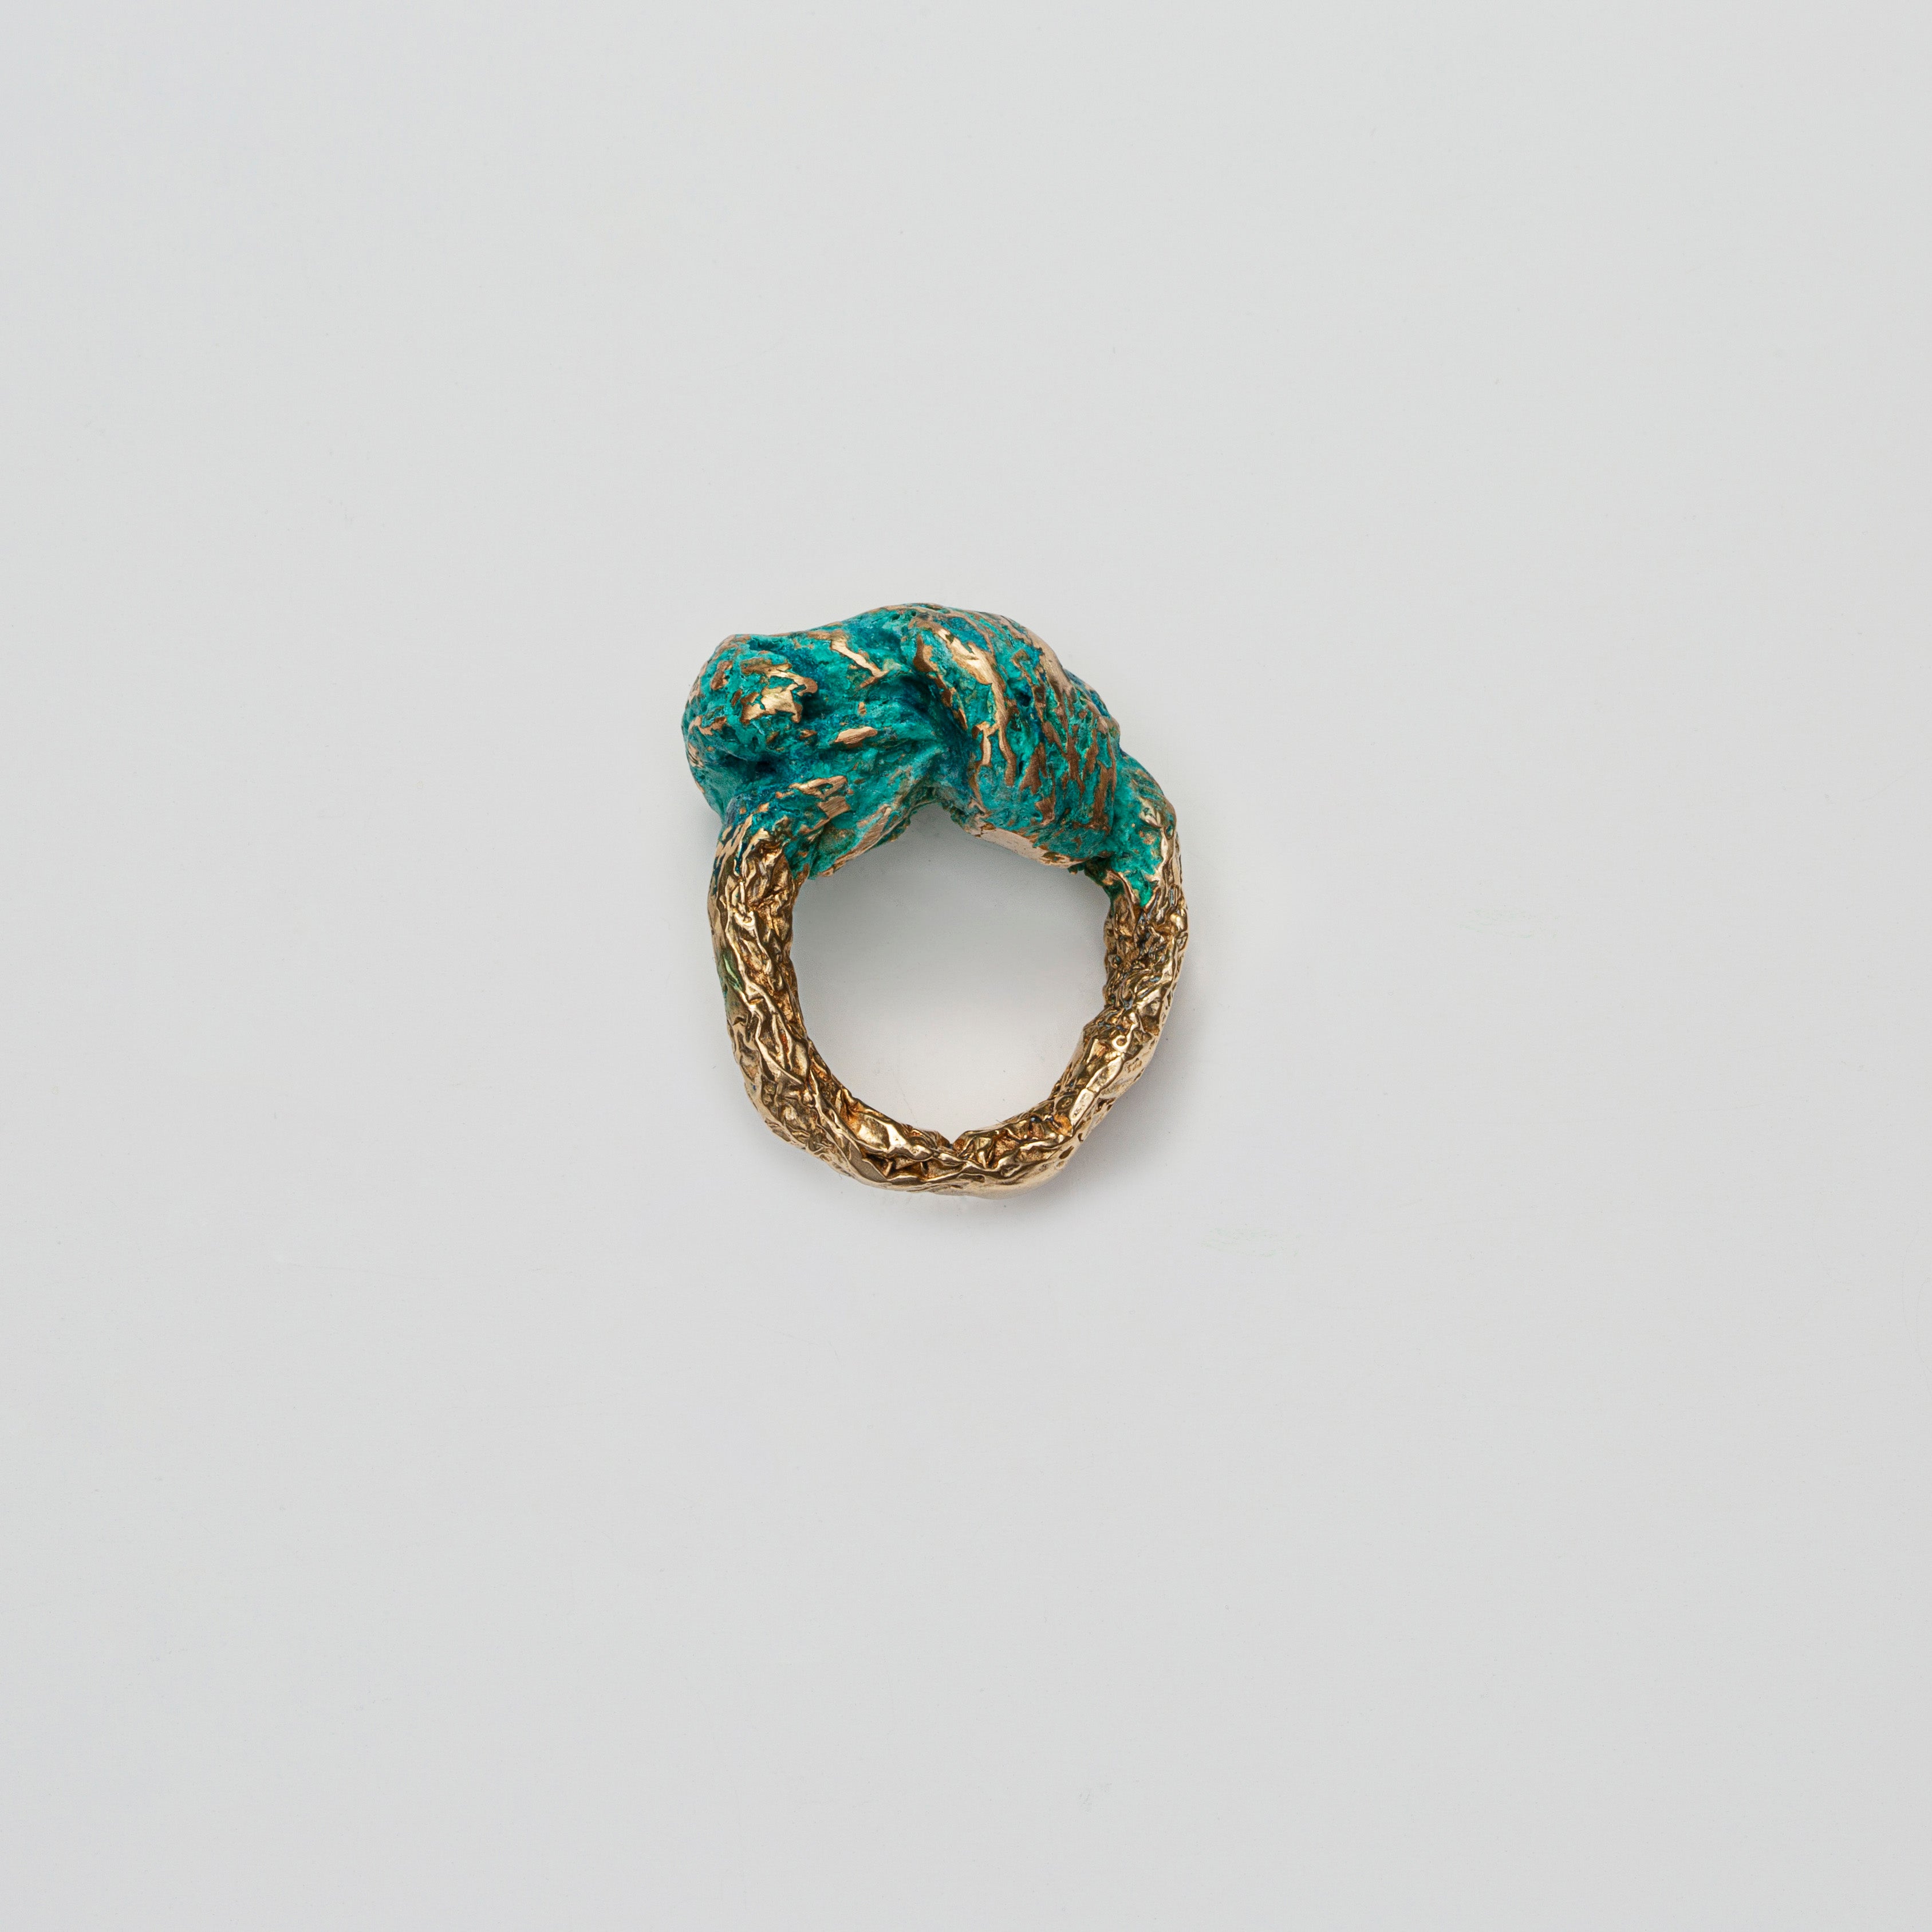 Pressed Knot Ring in Turqoise Oxidised Bronze Krista Kretzschmar